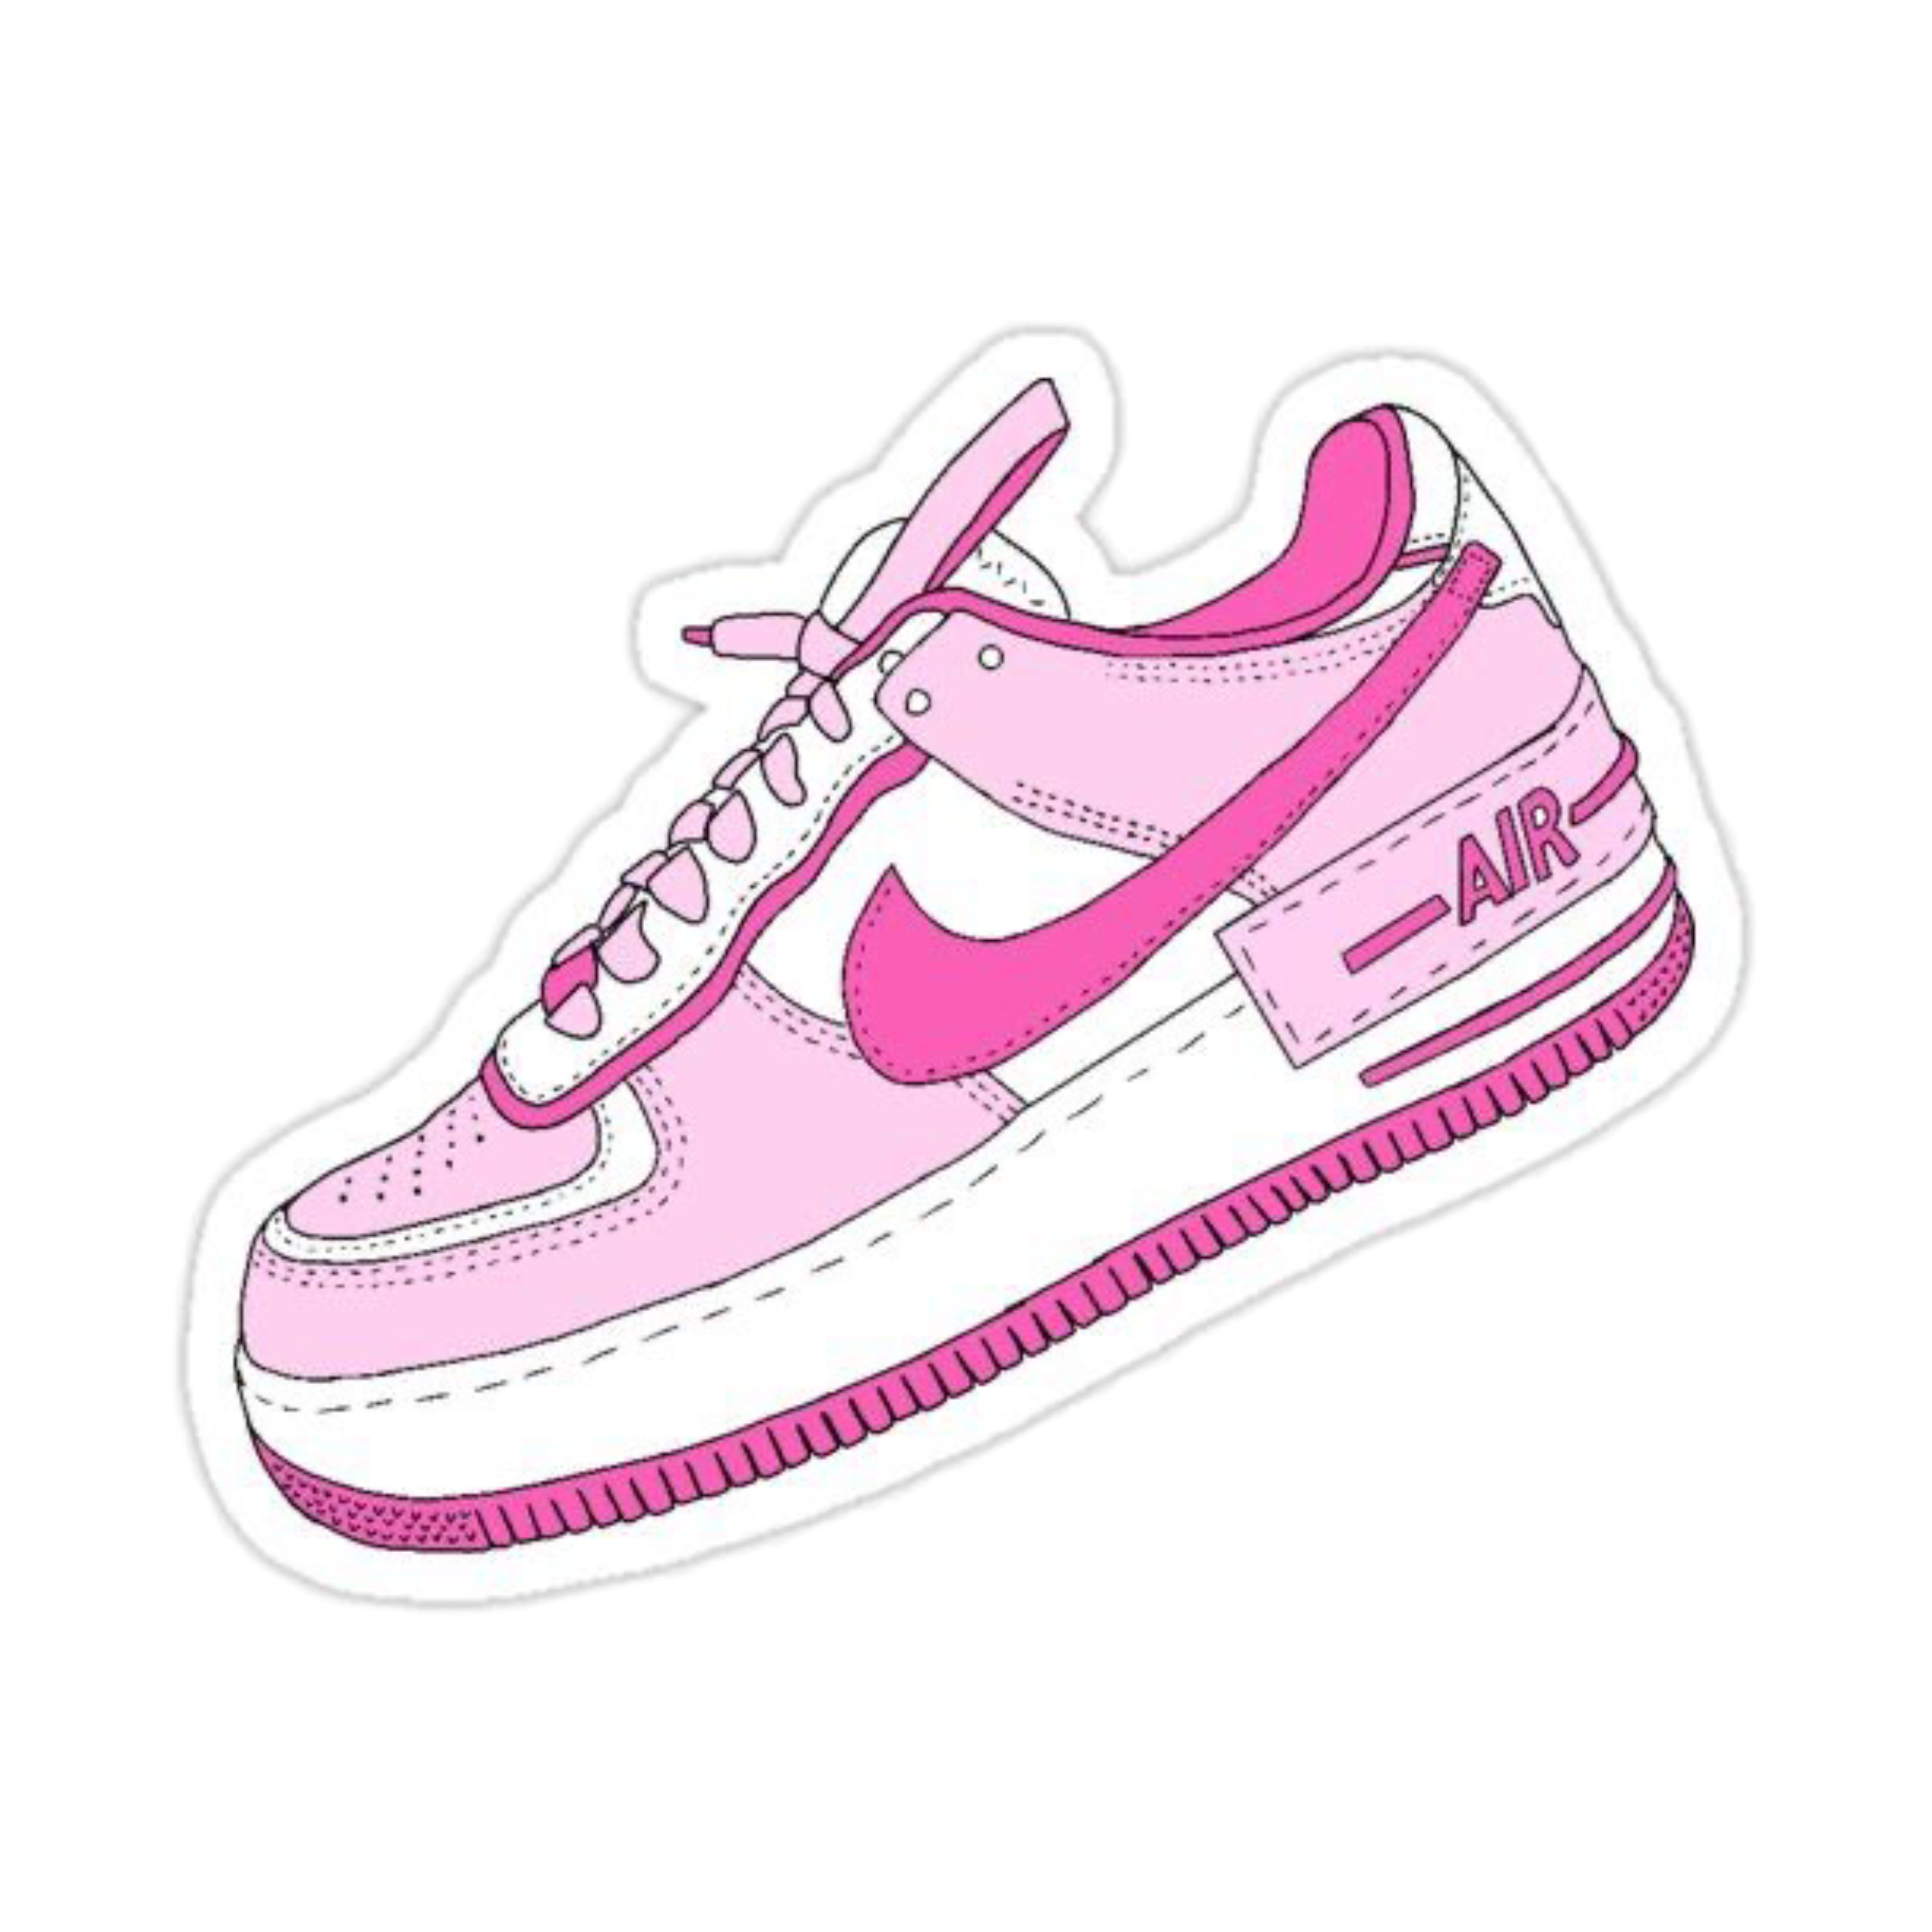 adecuado Babosa de mar casete nike shoes pink preppy freetoedit sticker by @aqua_moon_xx